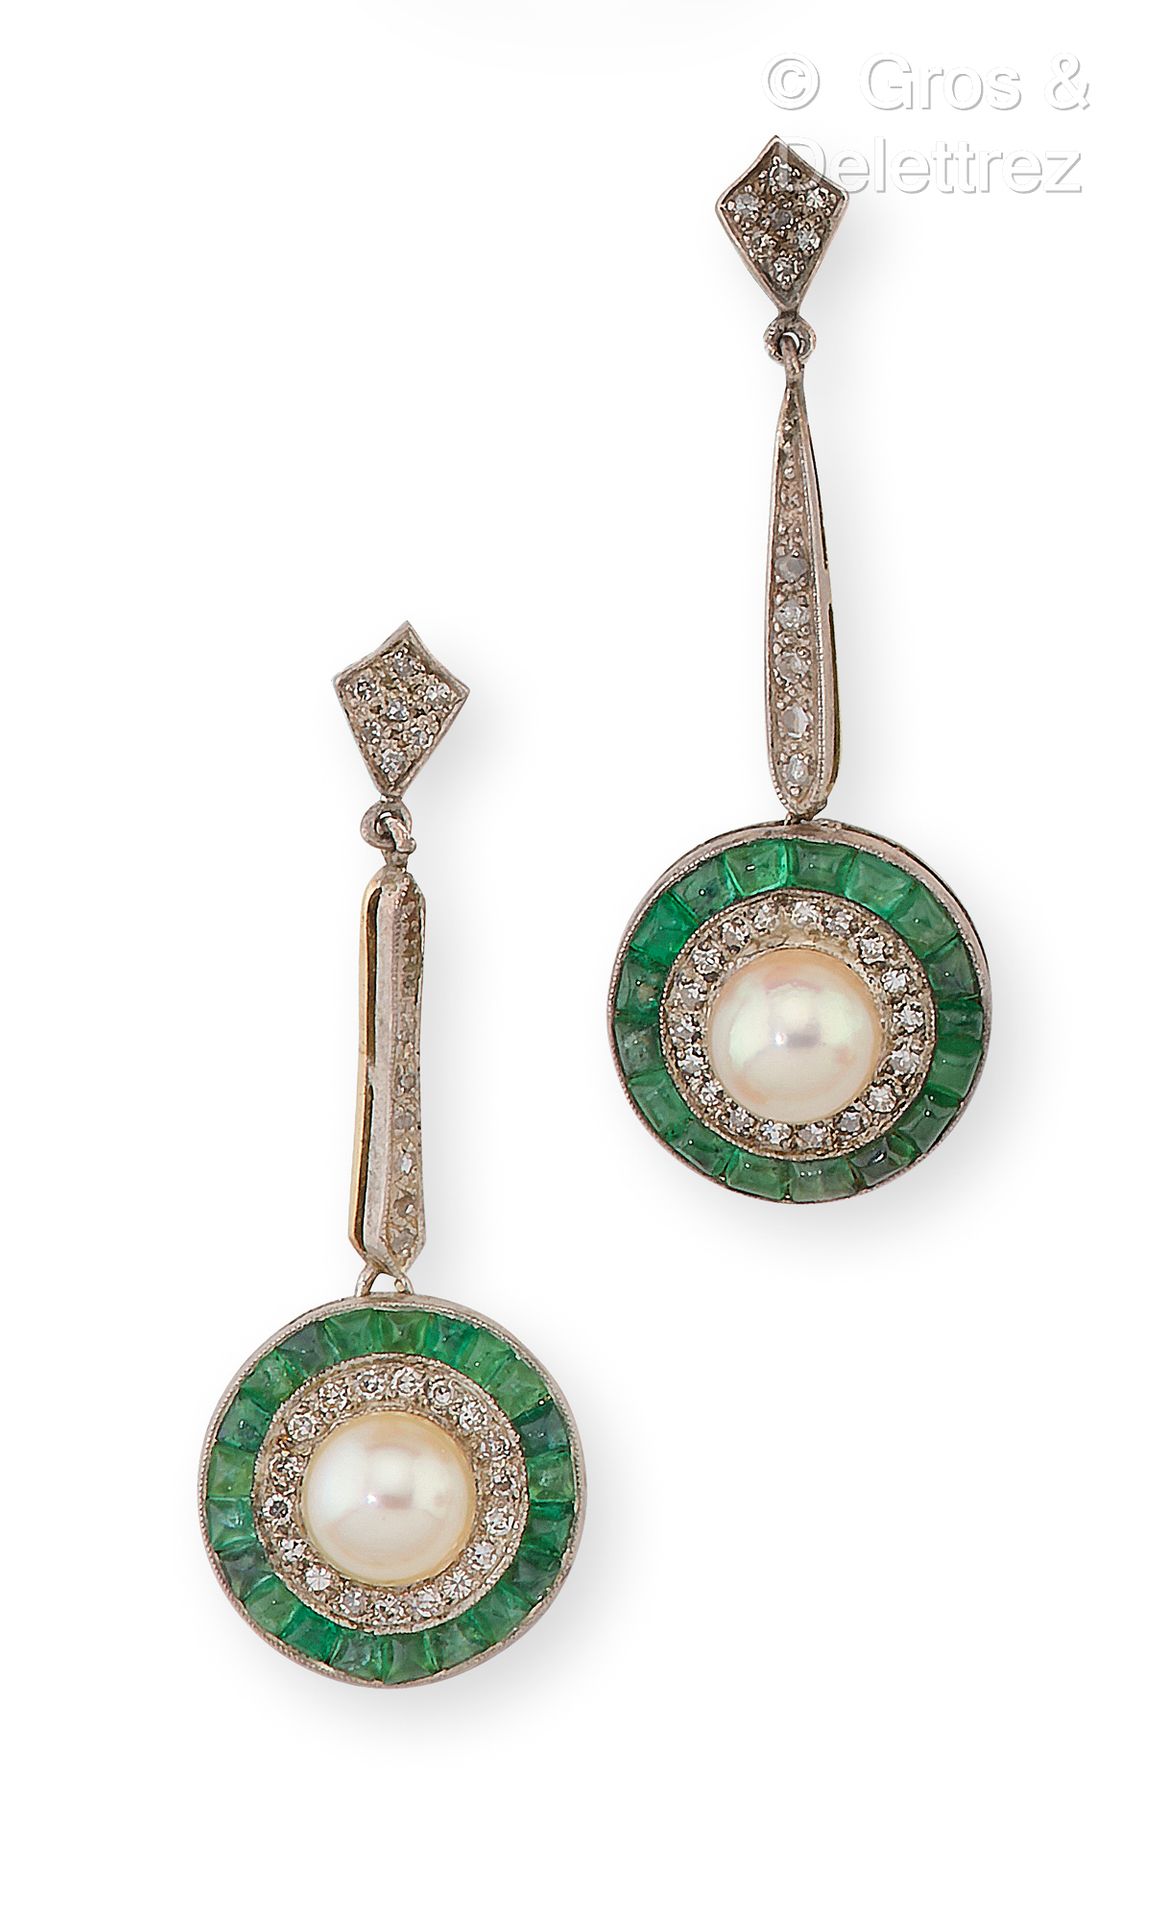 Null 一对黄金和银的耳环，拿着一个圆形的图案，上面装饰着一颗养殖珍珠，双双镶嵌着8/8钻石和甘蔗绿宝石。19世纪末的作品。长度：3.5厘米。毛重：6.8克。